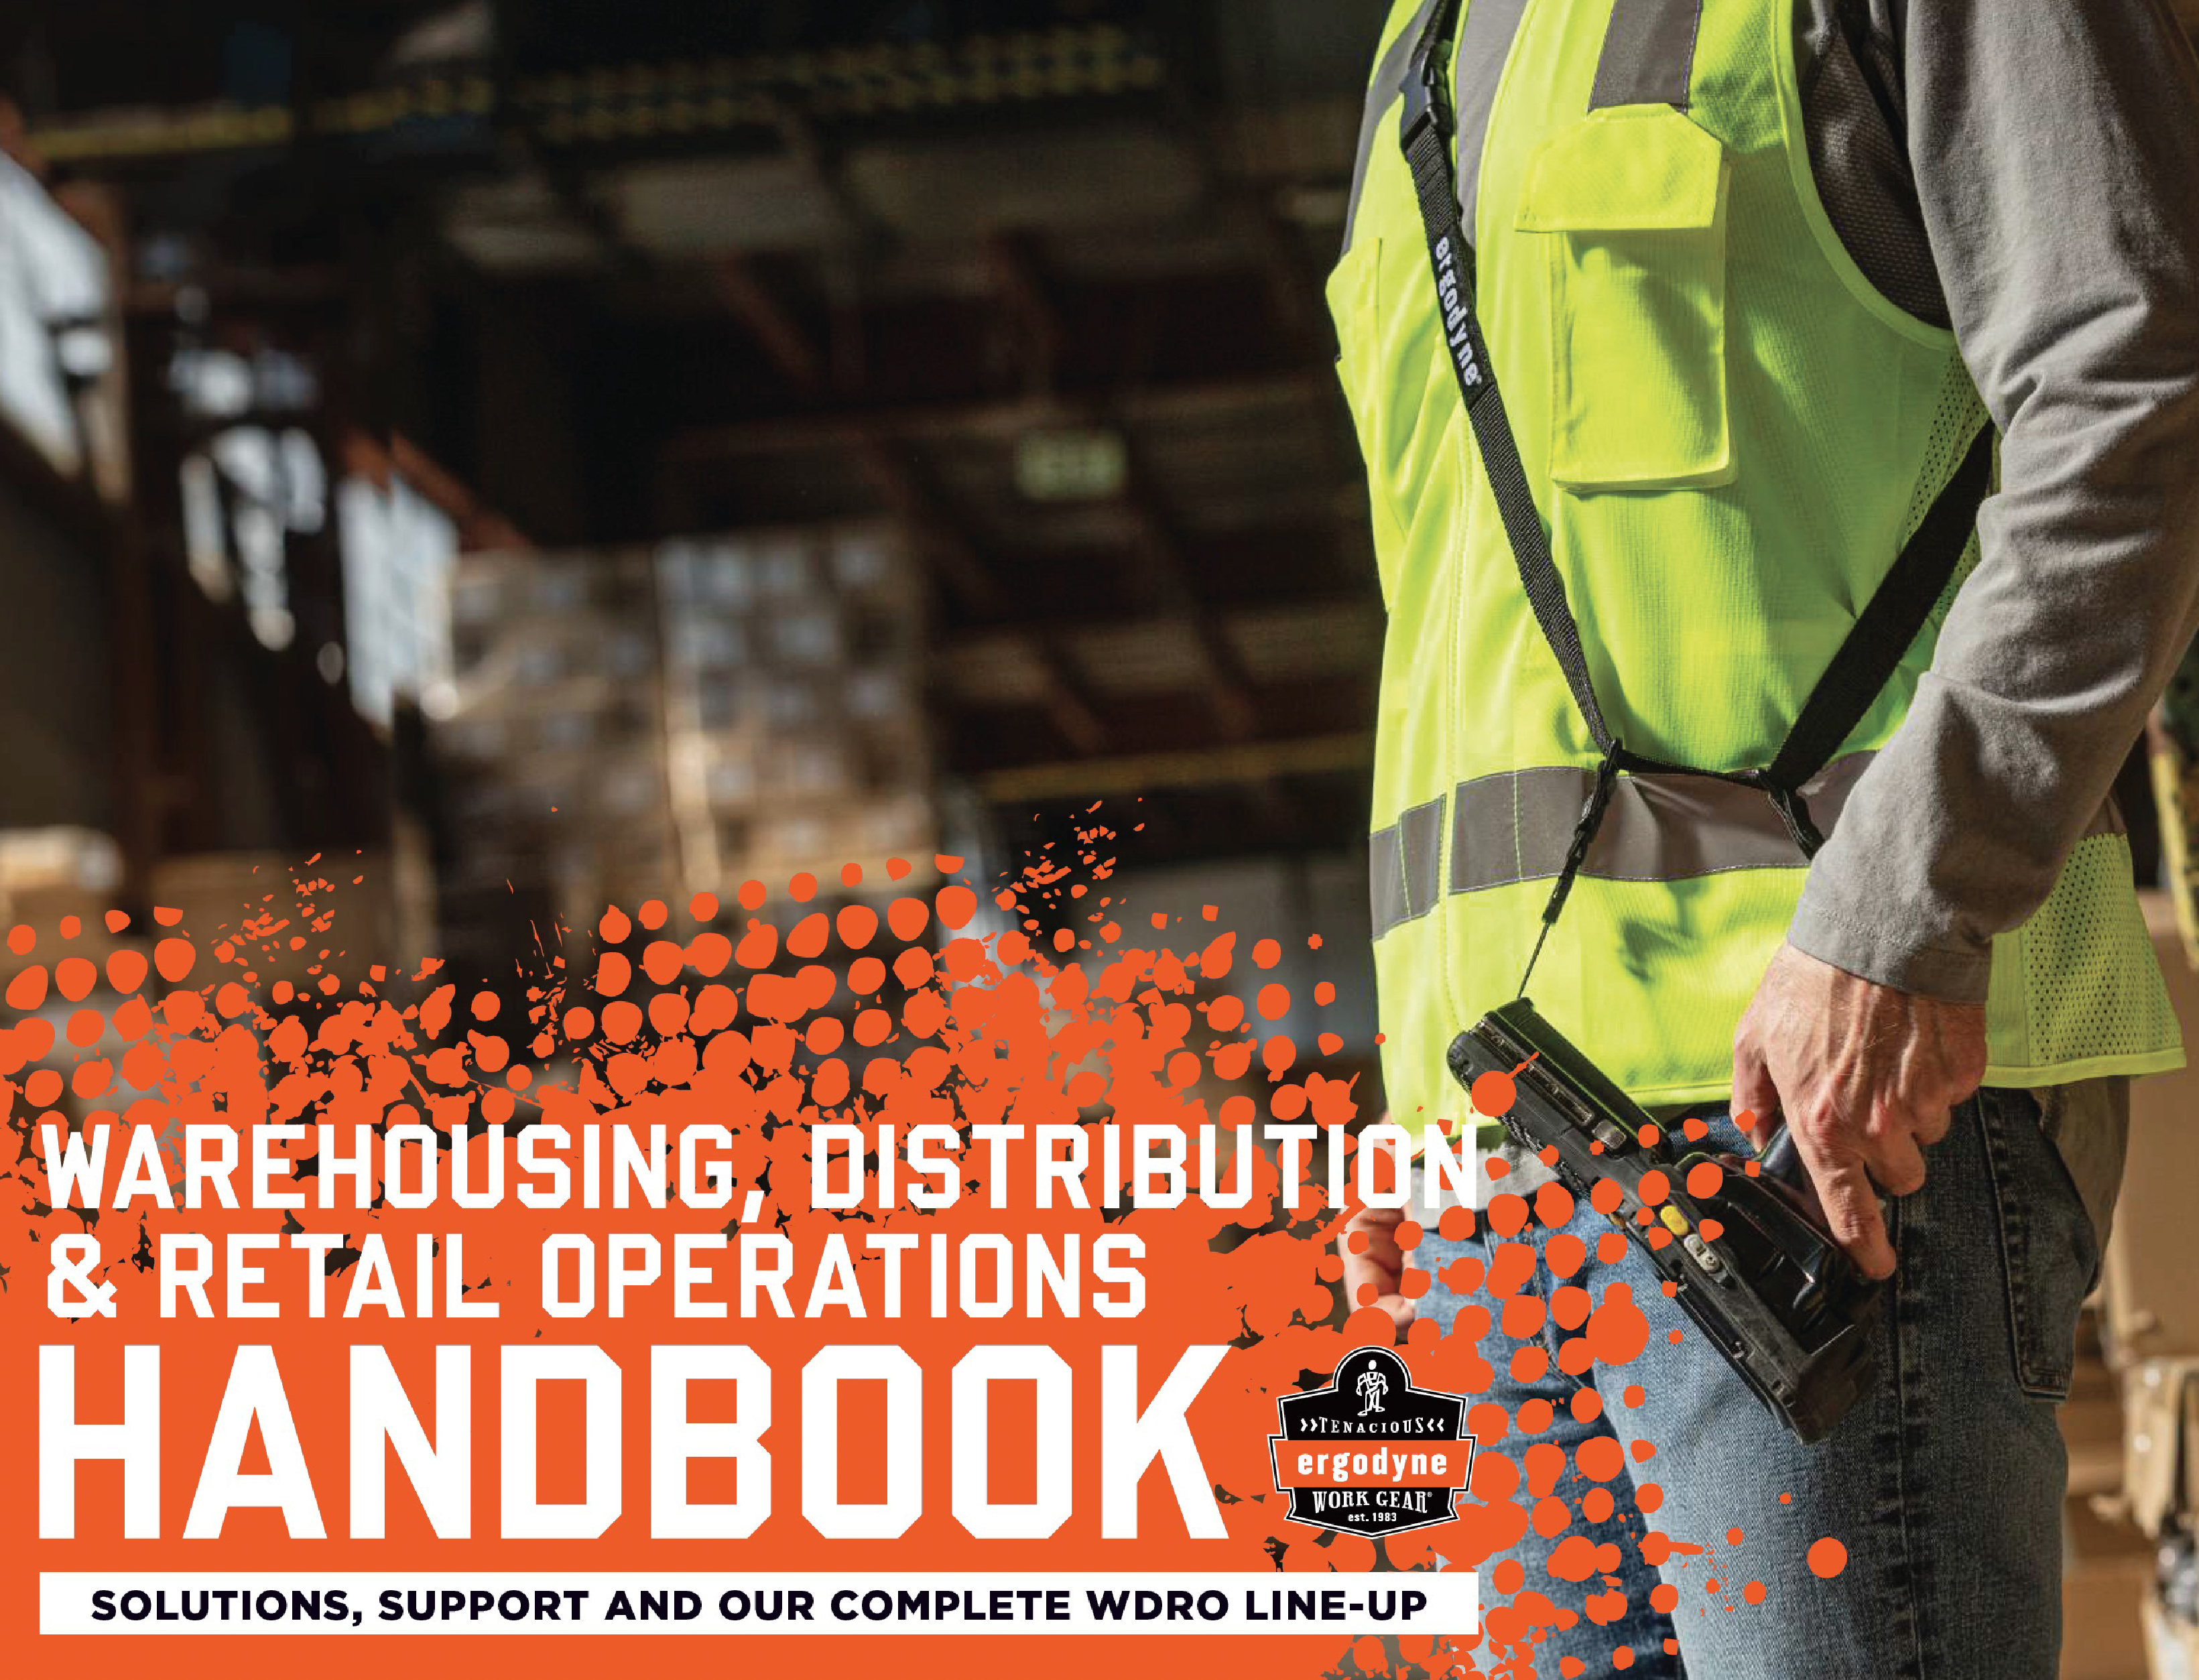 Ergodyne warehousing, distribution and retail operations handbook